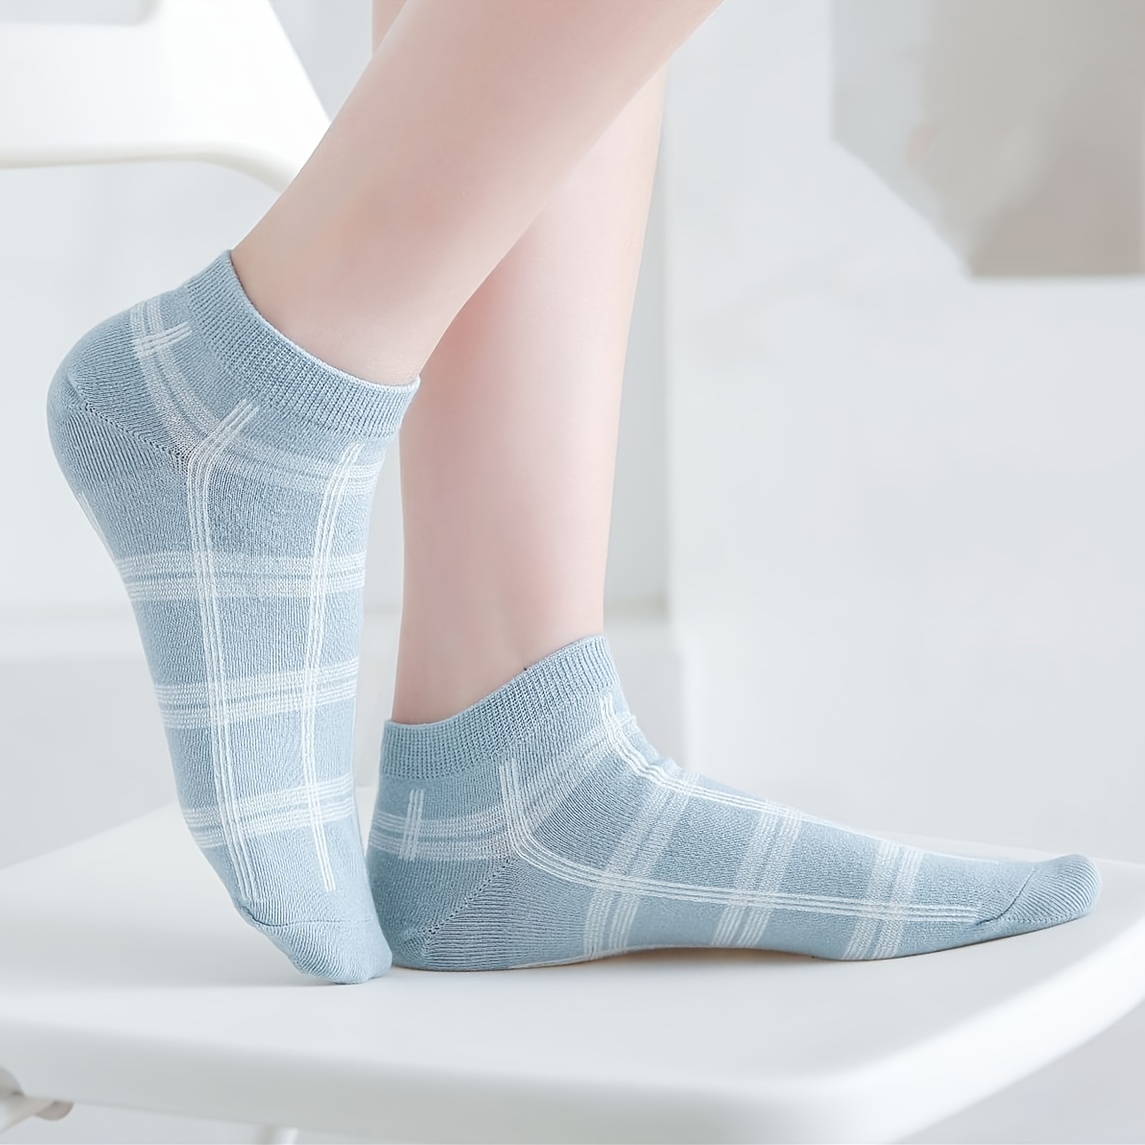 Open Toe Socks  Stylish casual for 30s ♡ Mayblue - A pleasant